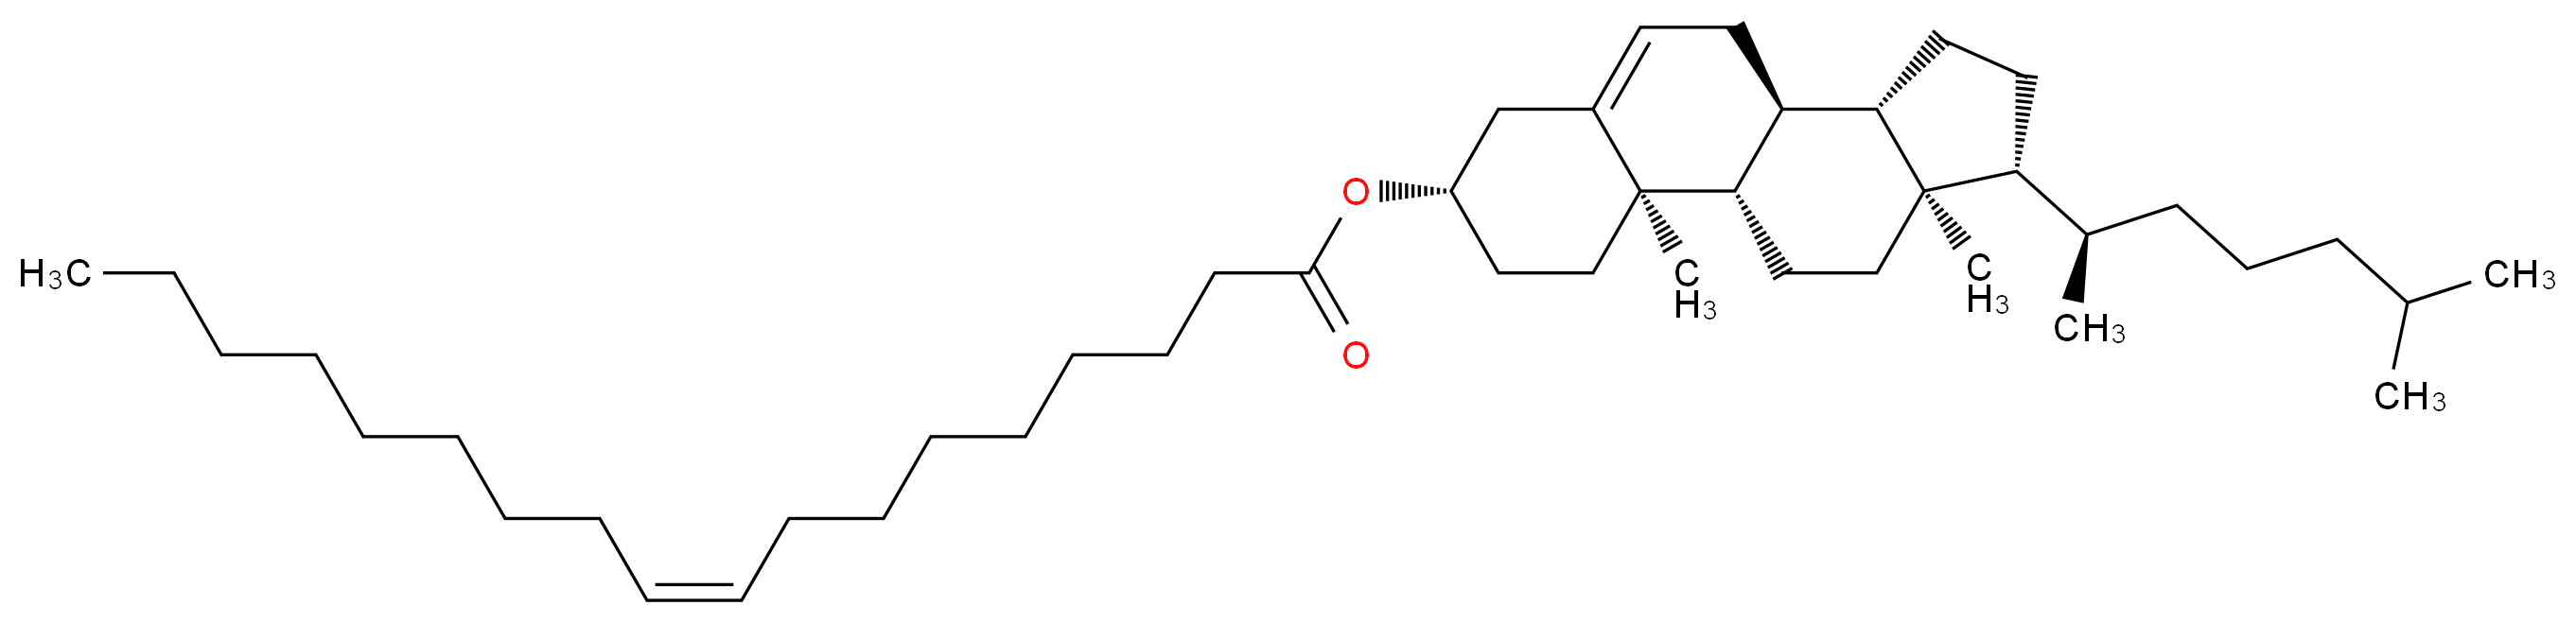 CAS_303-43-5 molecular structure